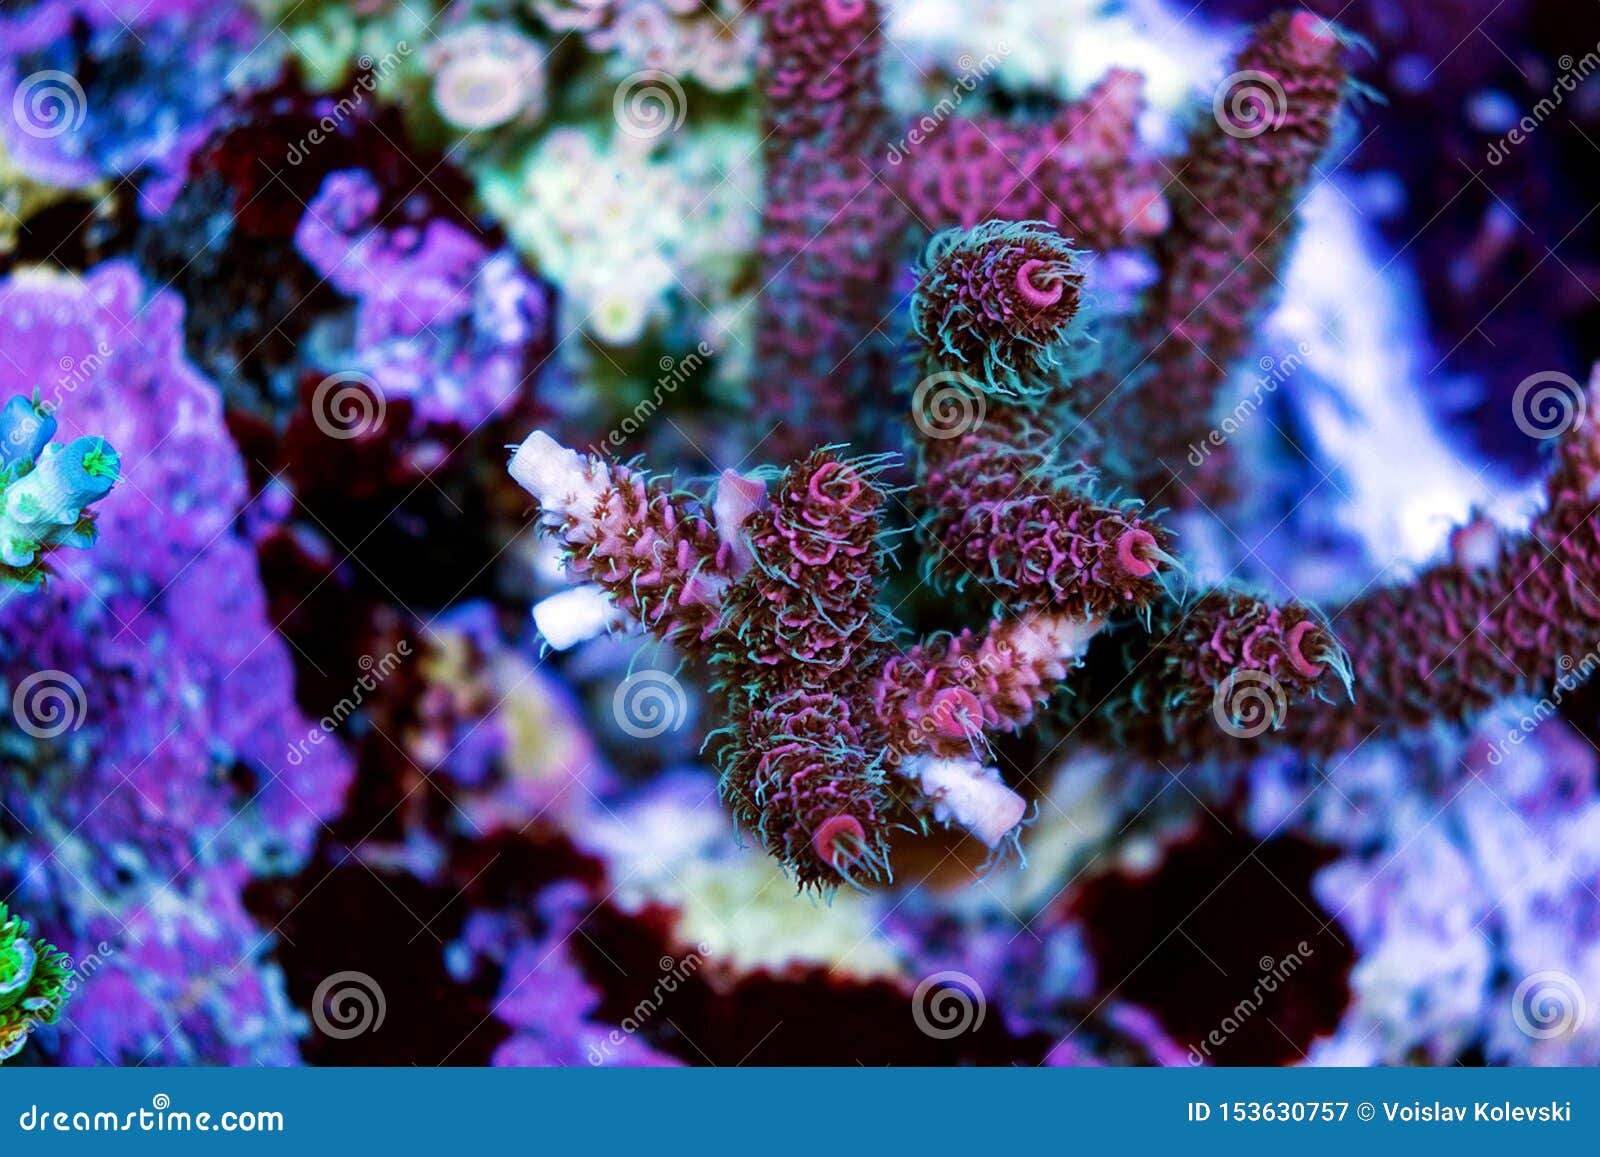 Acropora Short Polyps Stony Coral Stock Image | CartoonDealer.com ...